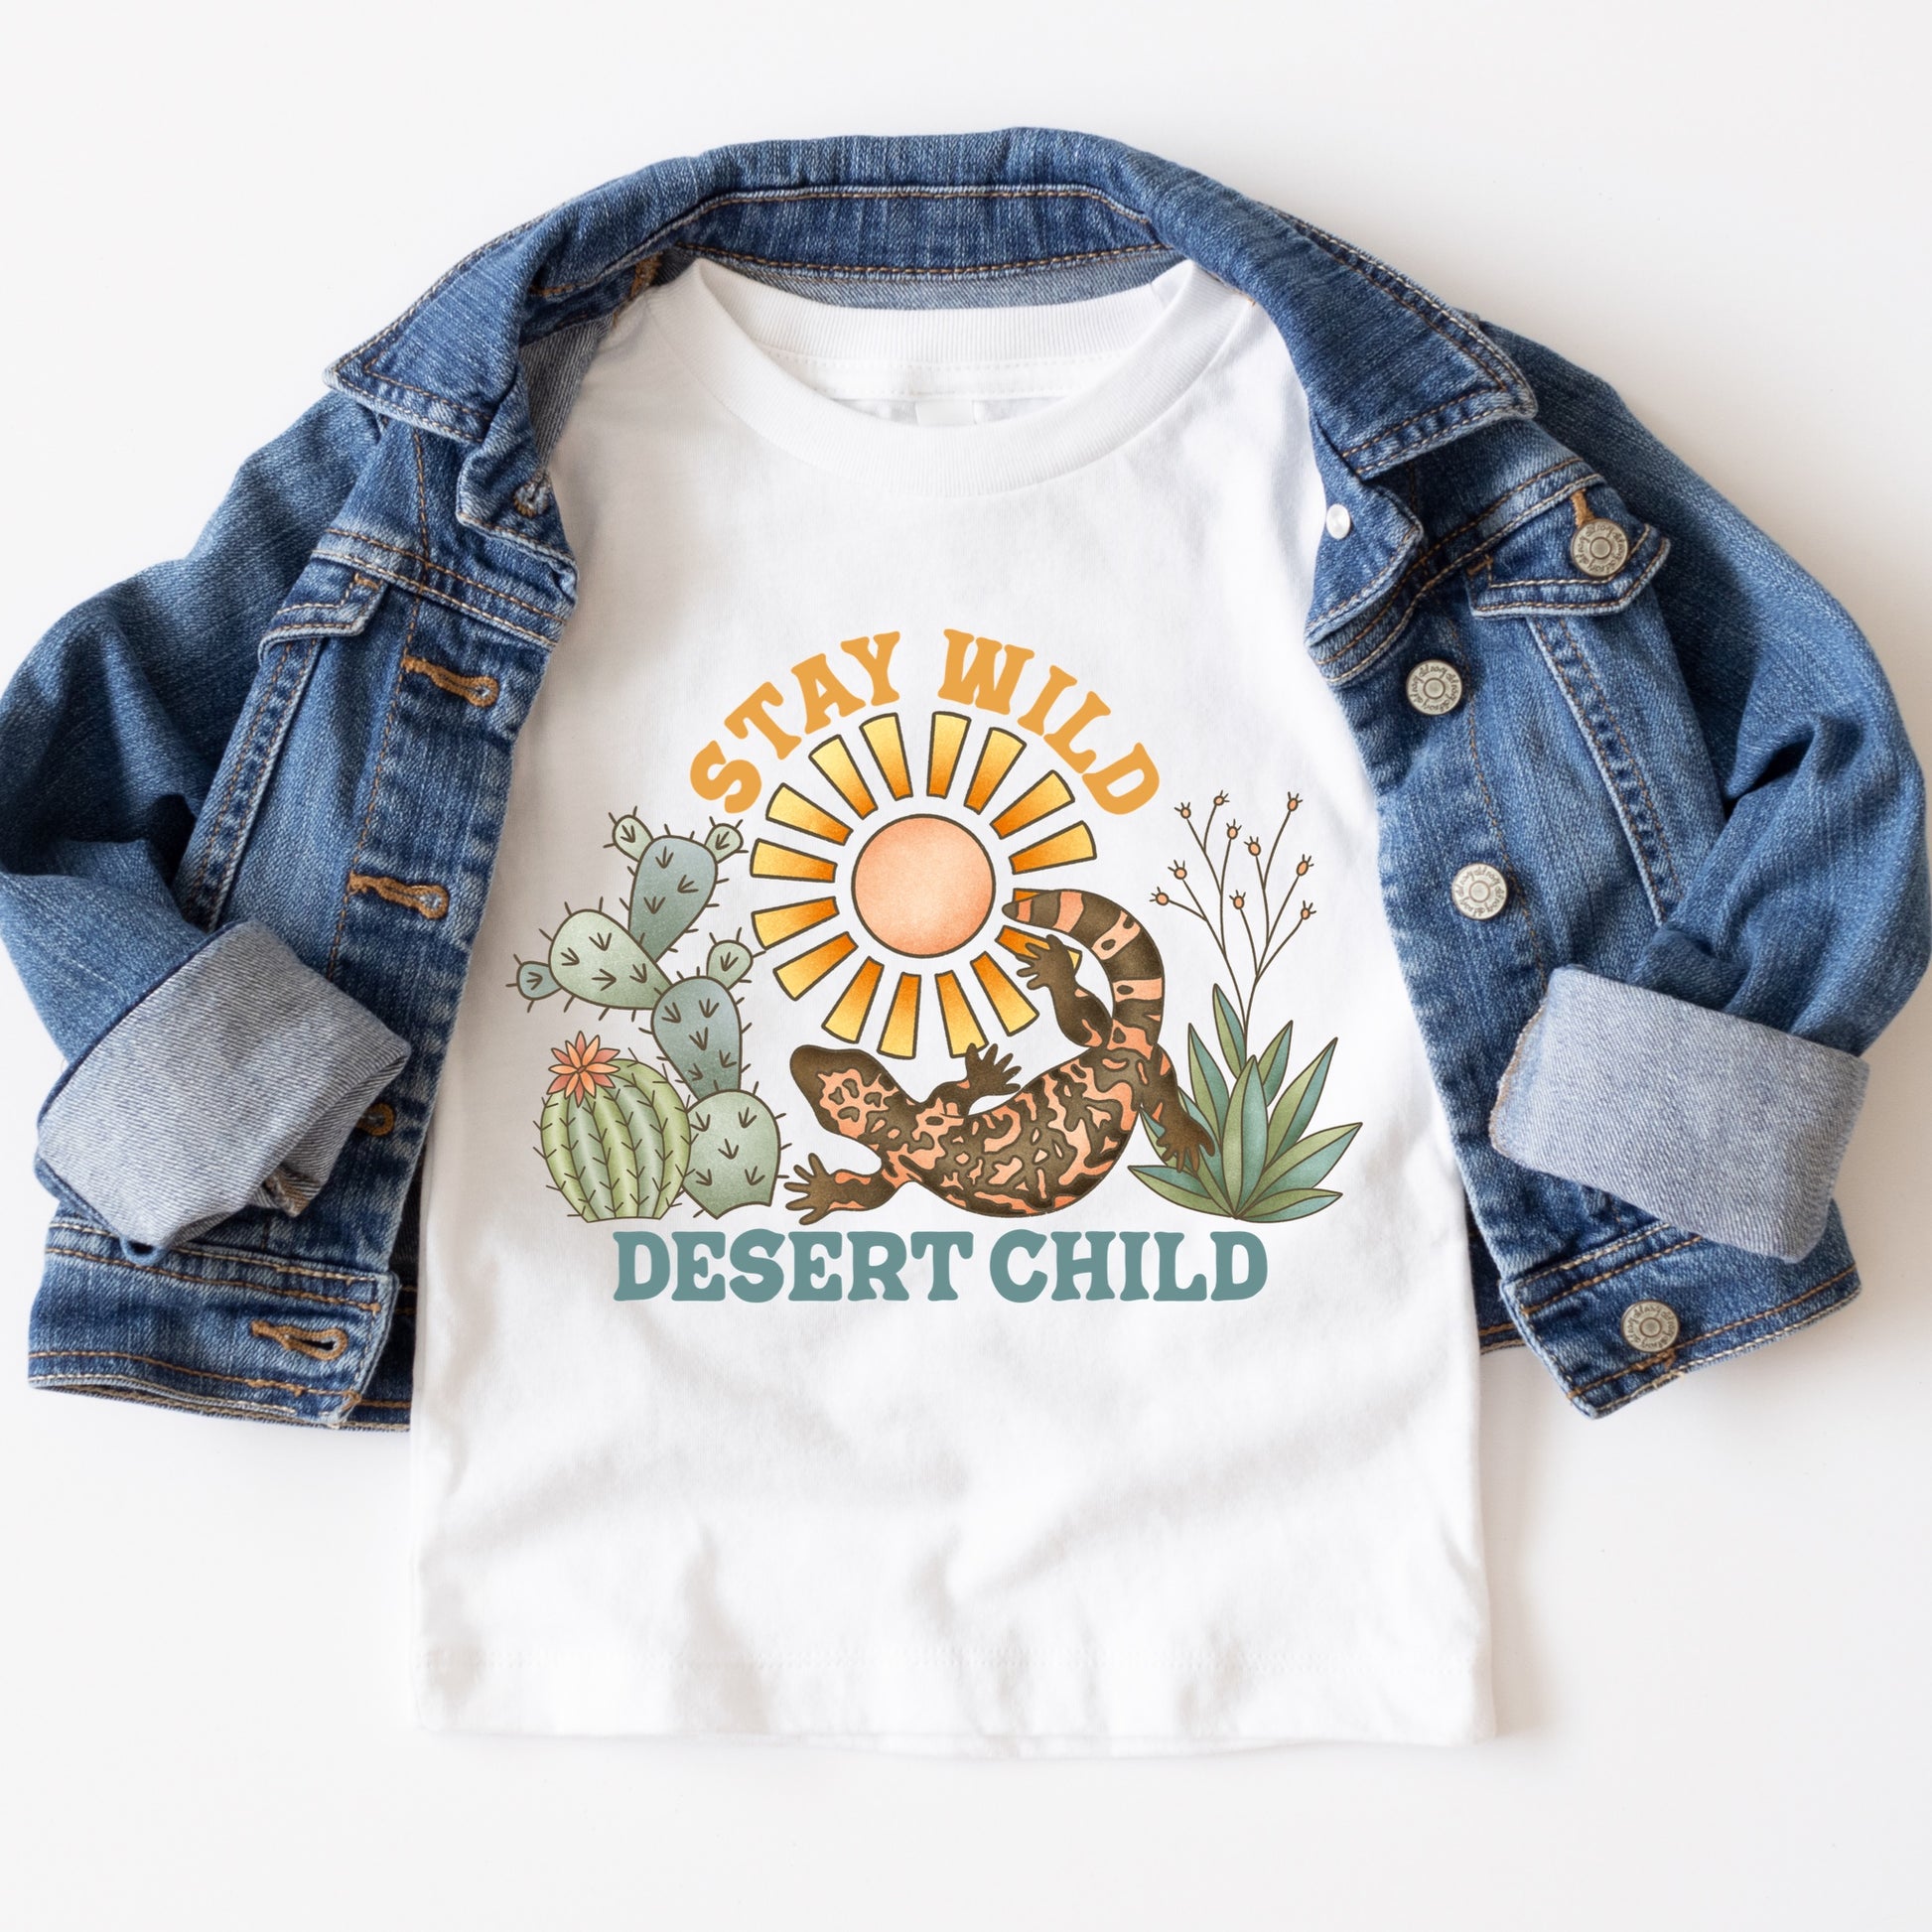 Desert Plants, Salamanders, Sun Rays, and the phrase "Stay Wild Desert Child" iron on heat transfer.